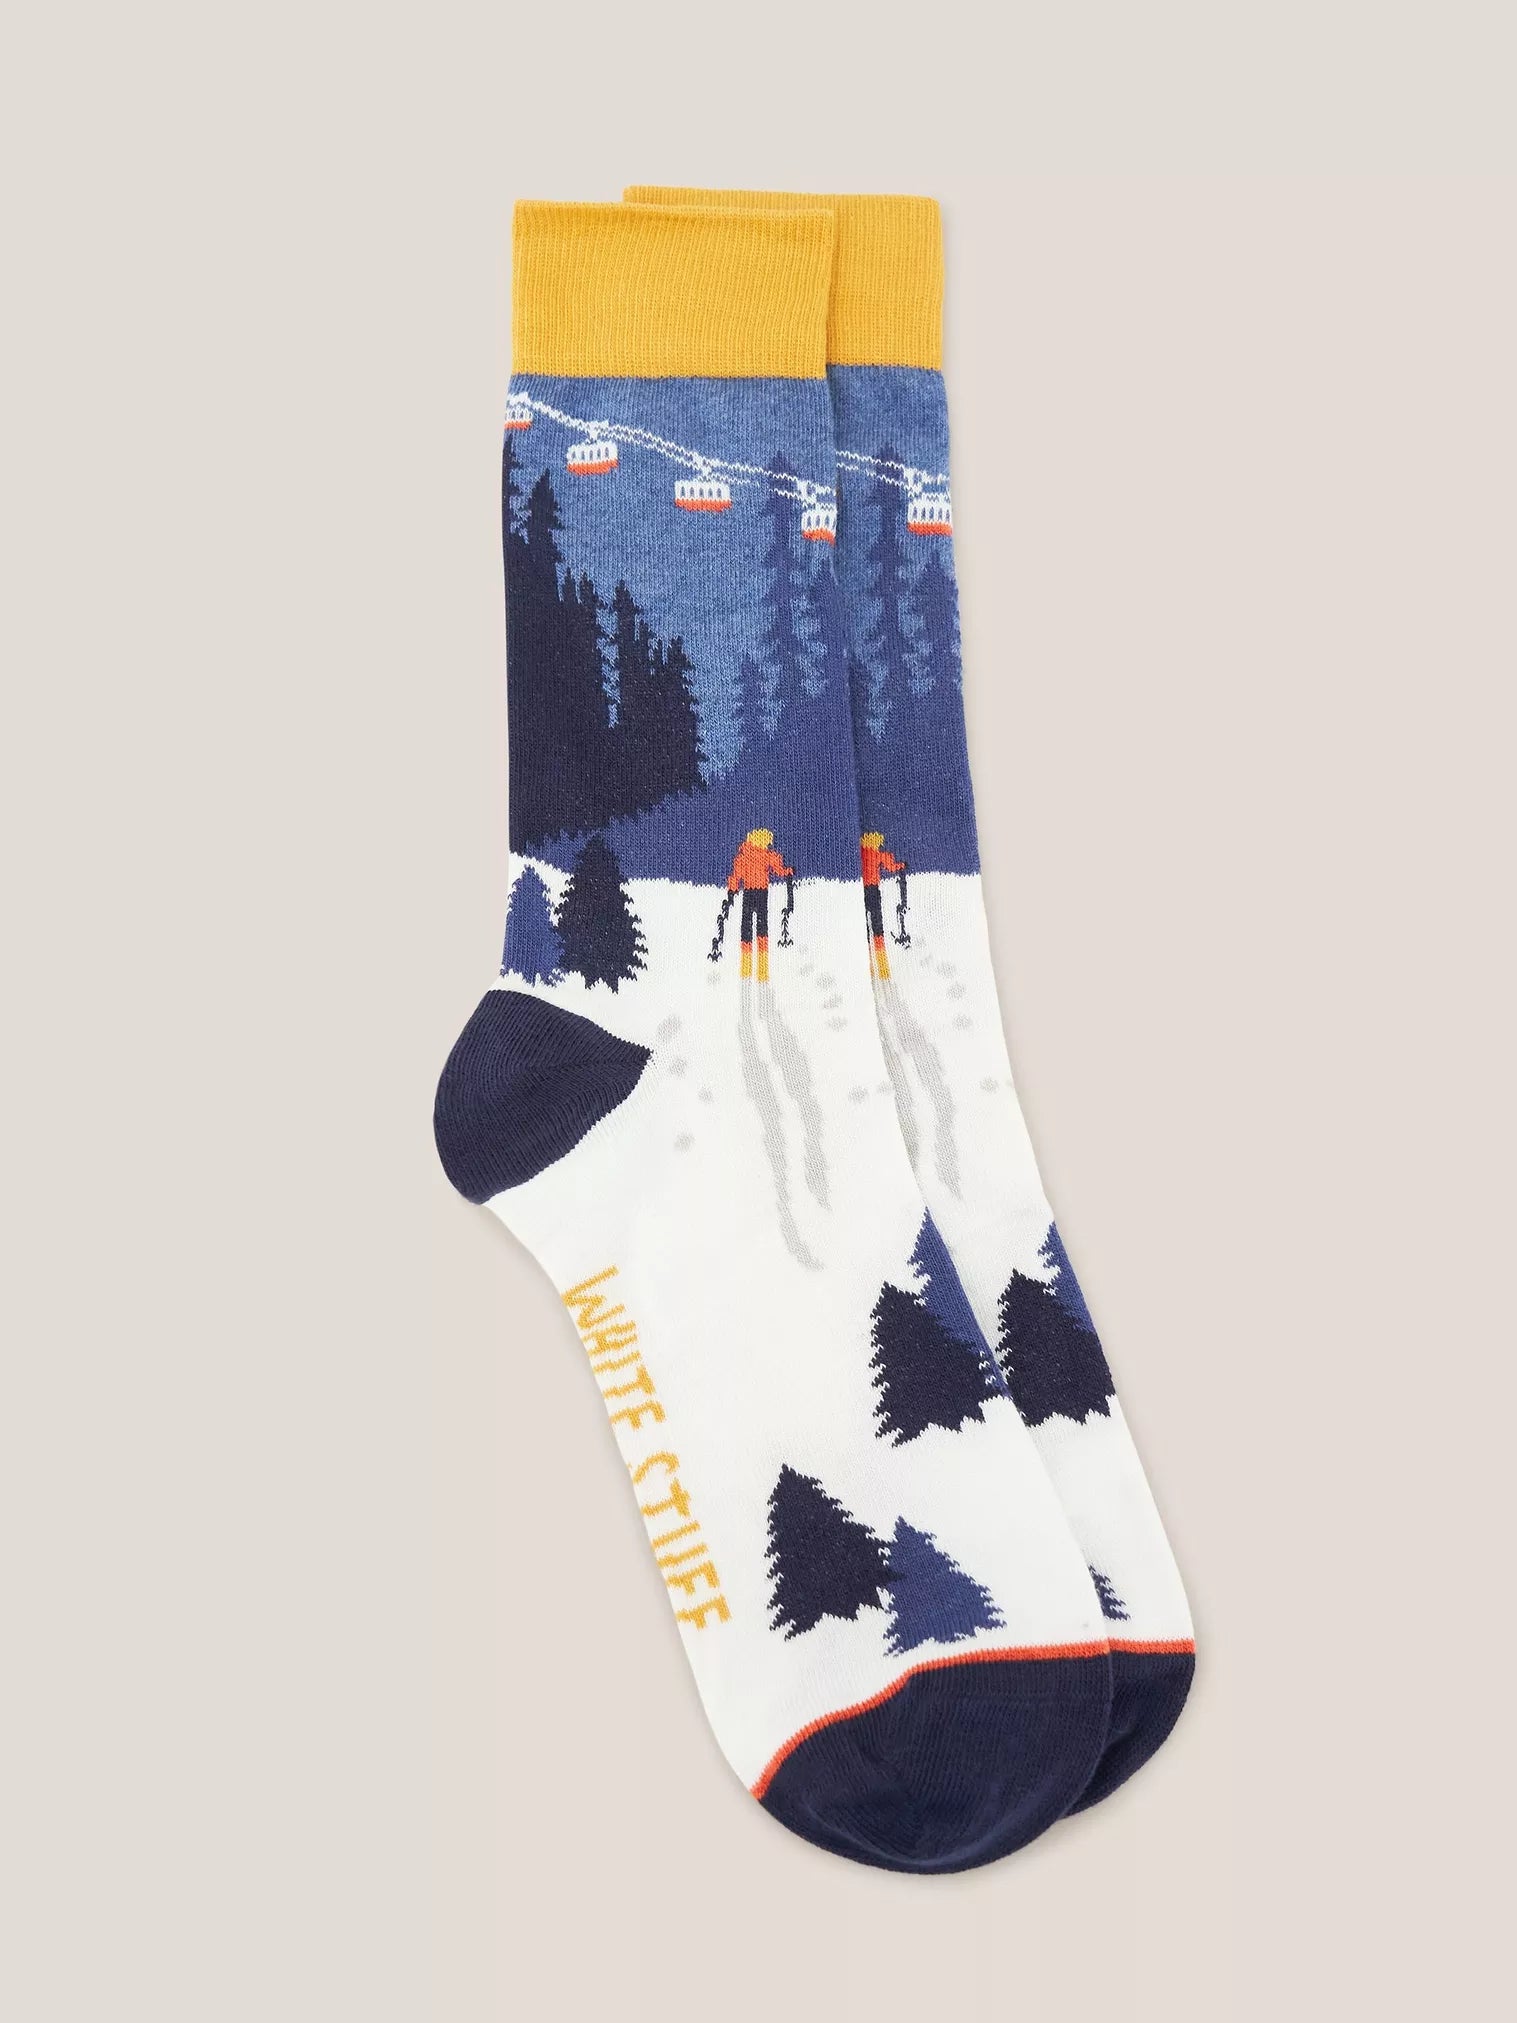 White Stuff Ski Scenic Socks in a Cracker Blue Multi